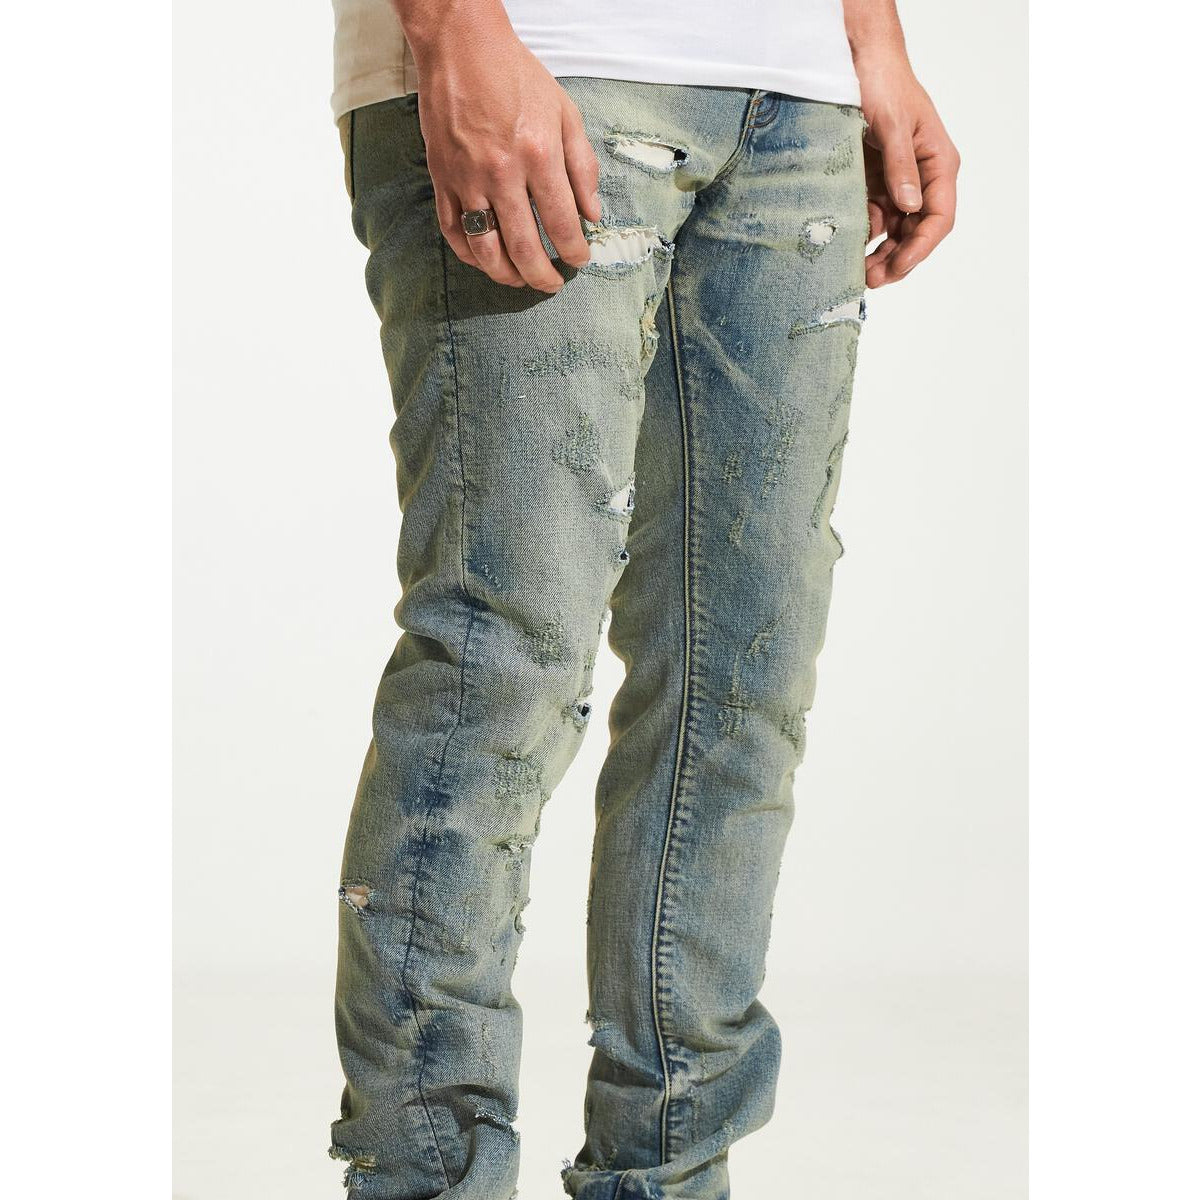 Crysp Denim Atlantic Blue Wash Ripped Jeans (CRYH22-215)